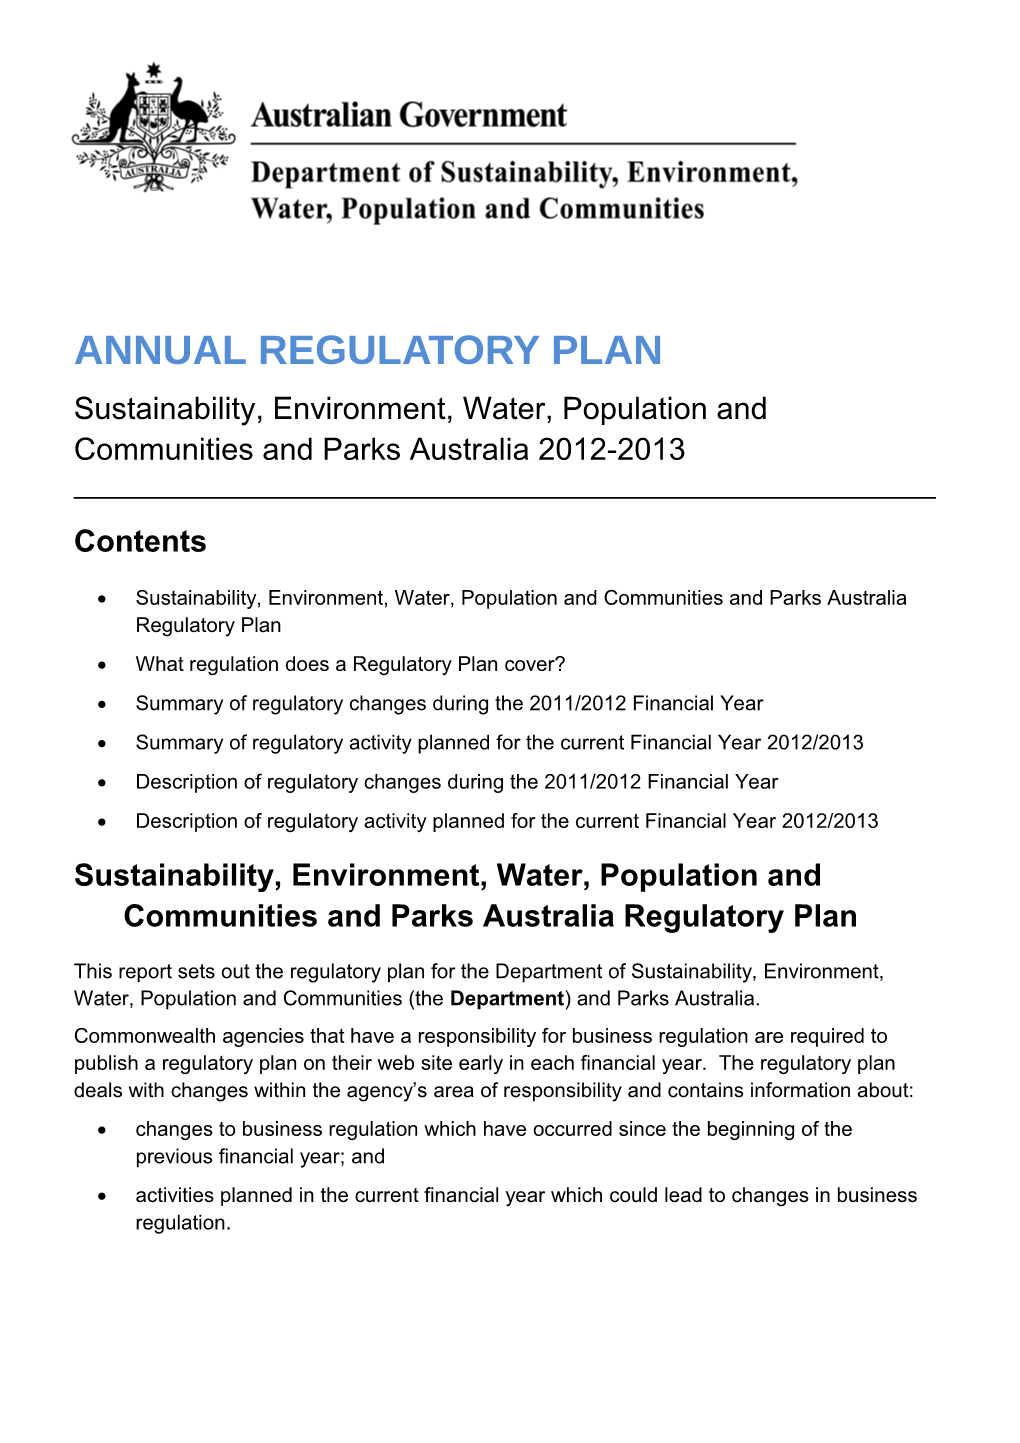 Annual Regulatory Plan - Sustainability, Environment, Water, Population and Communities